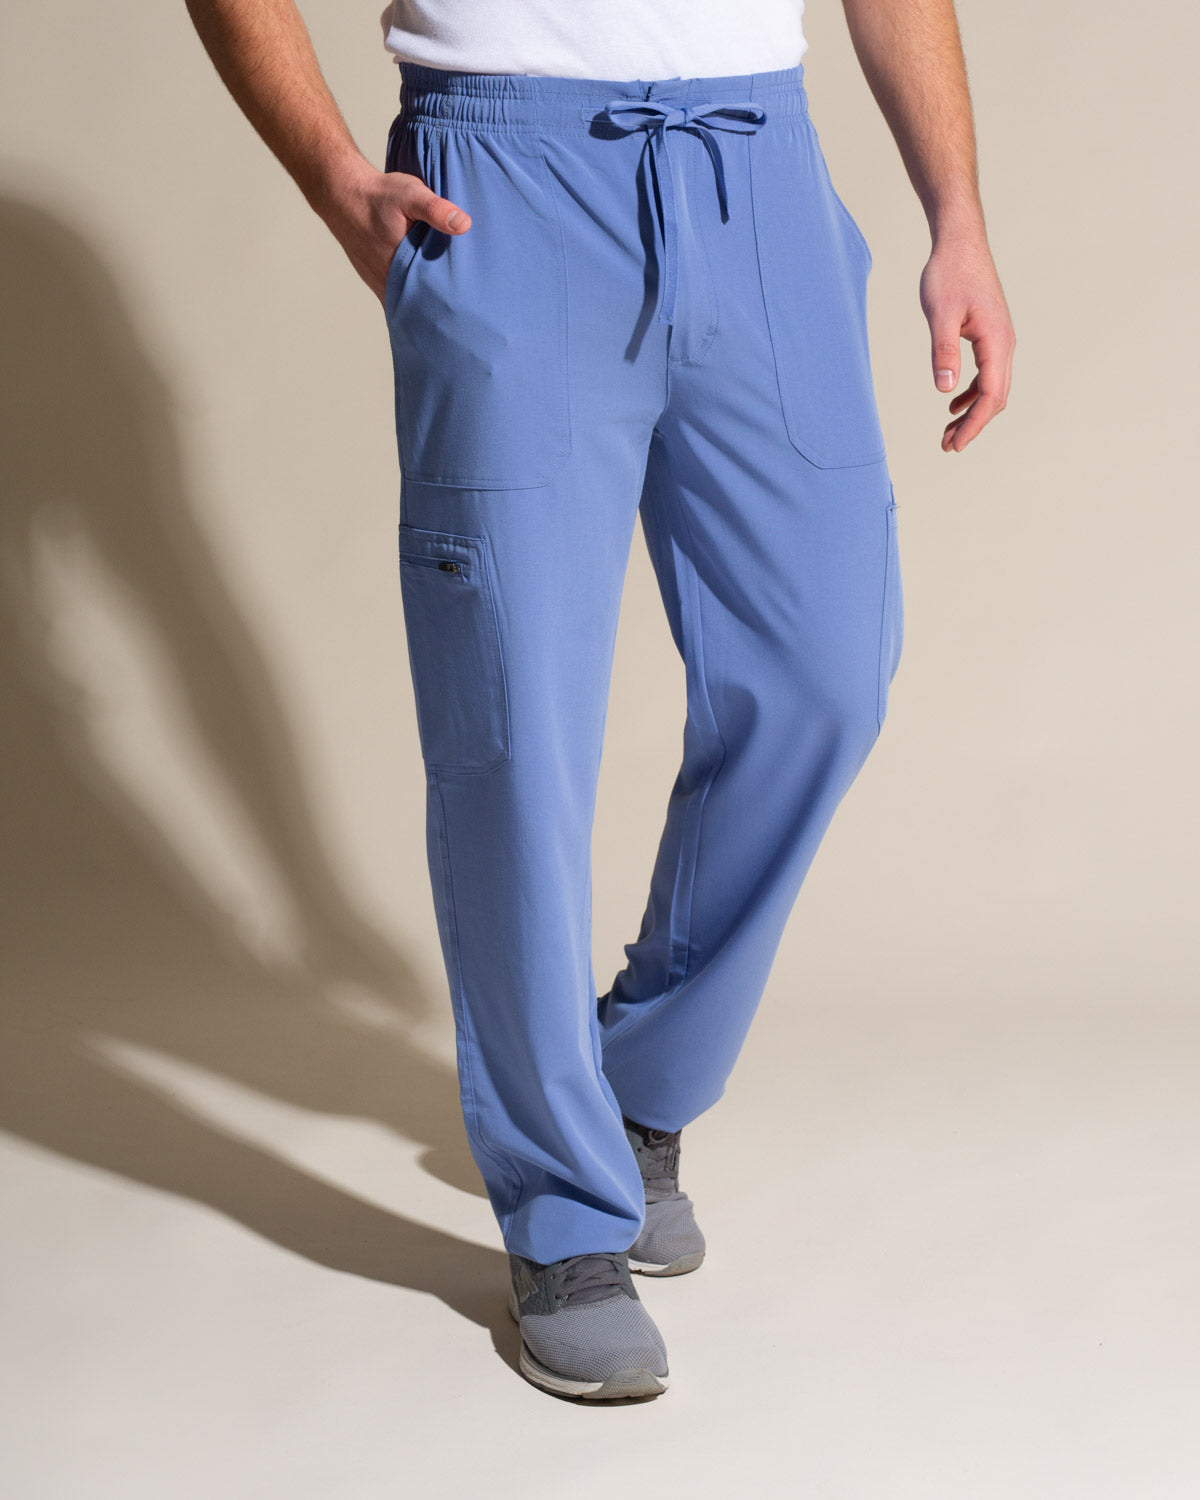 Pantalón Hombre | Uniformes Clínicos | Scorpi Comfort